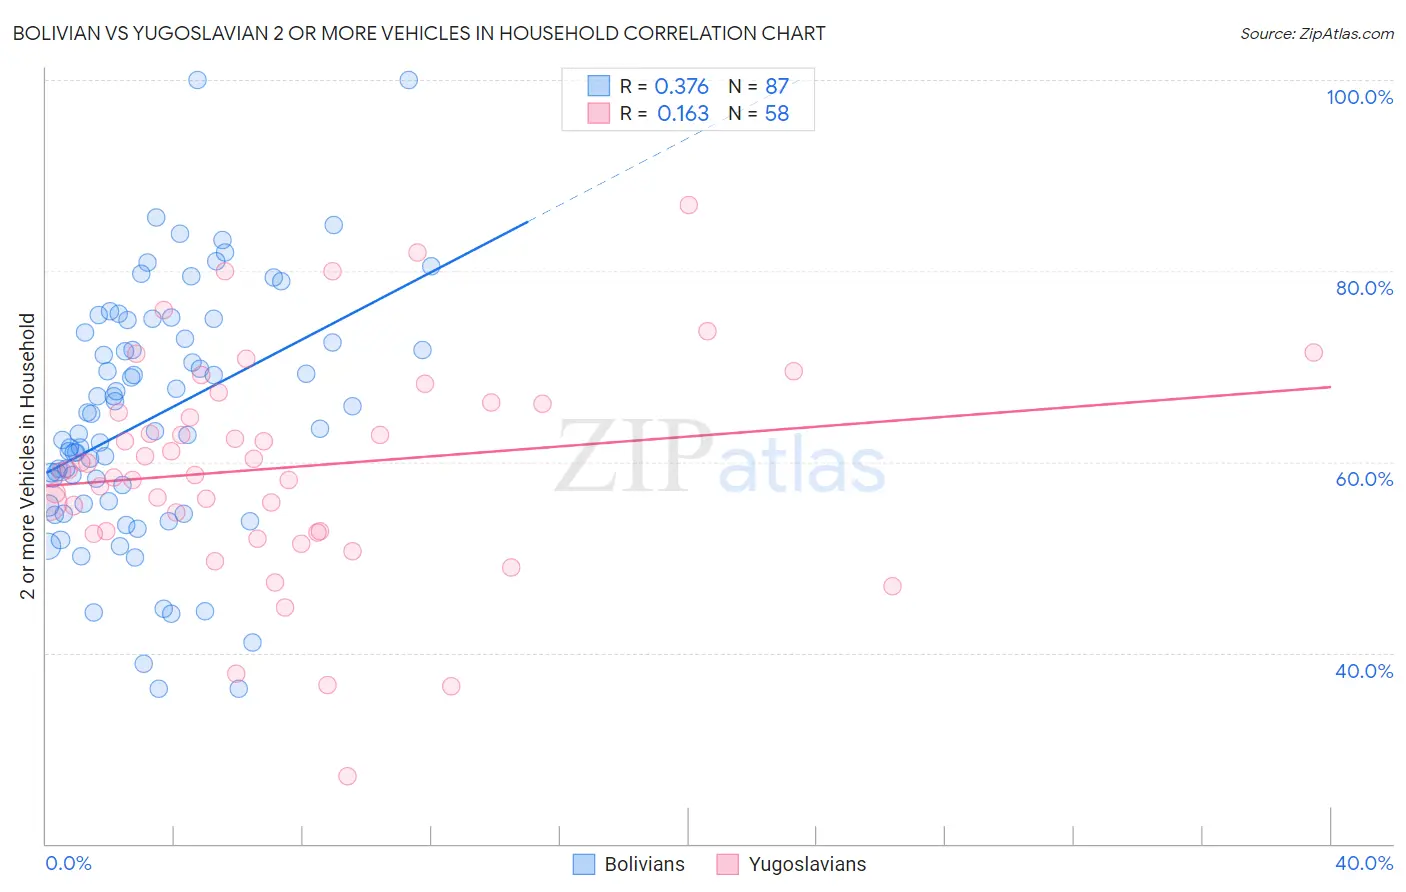 Bolivian vs Yugoslavian 2 or more Vehicles in Household